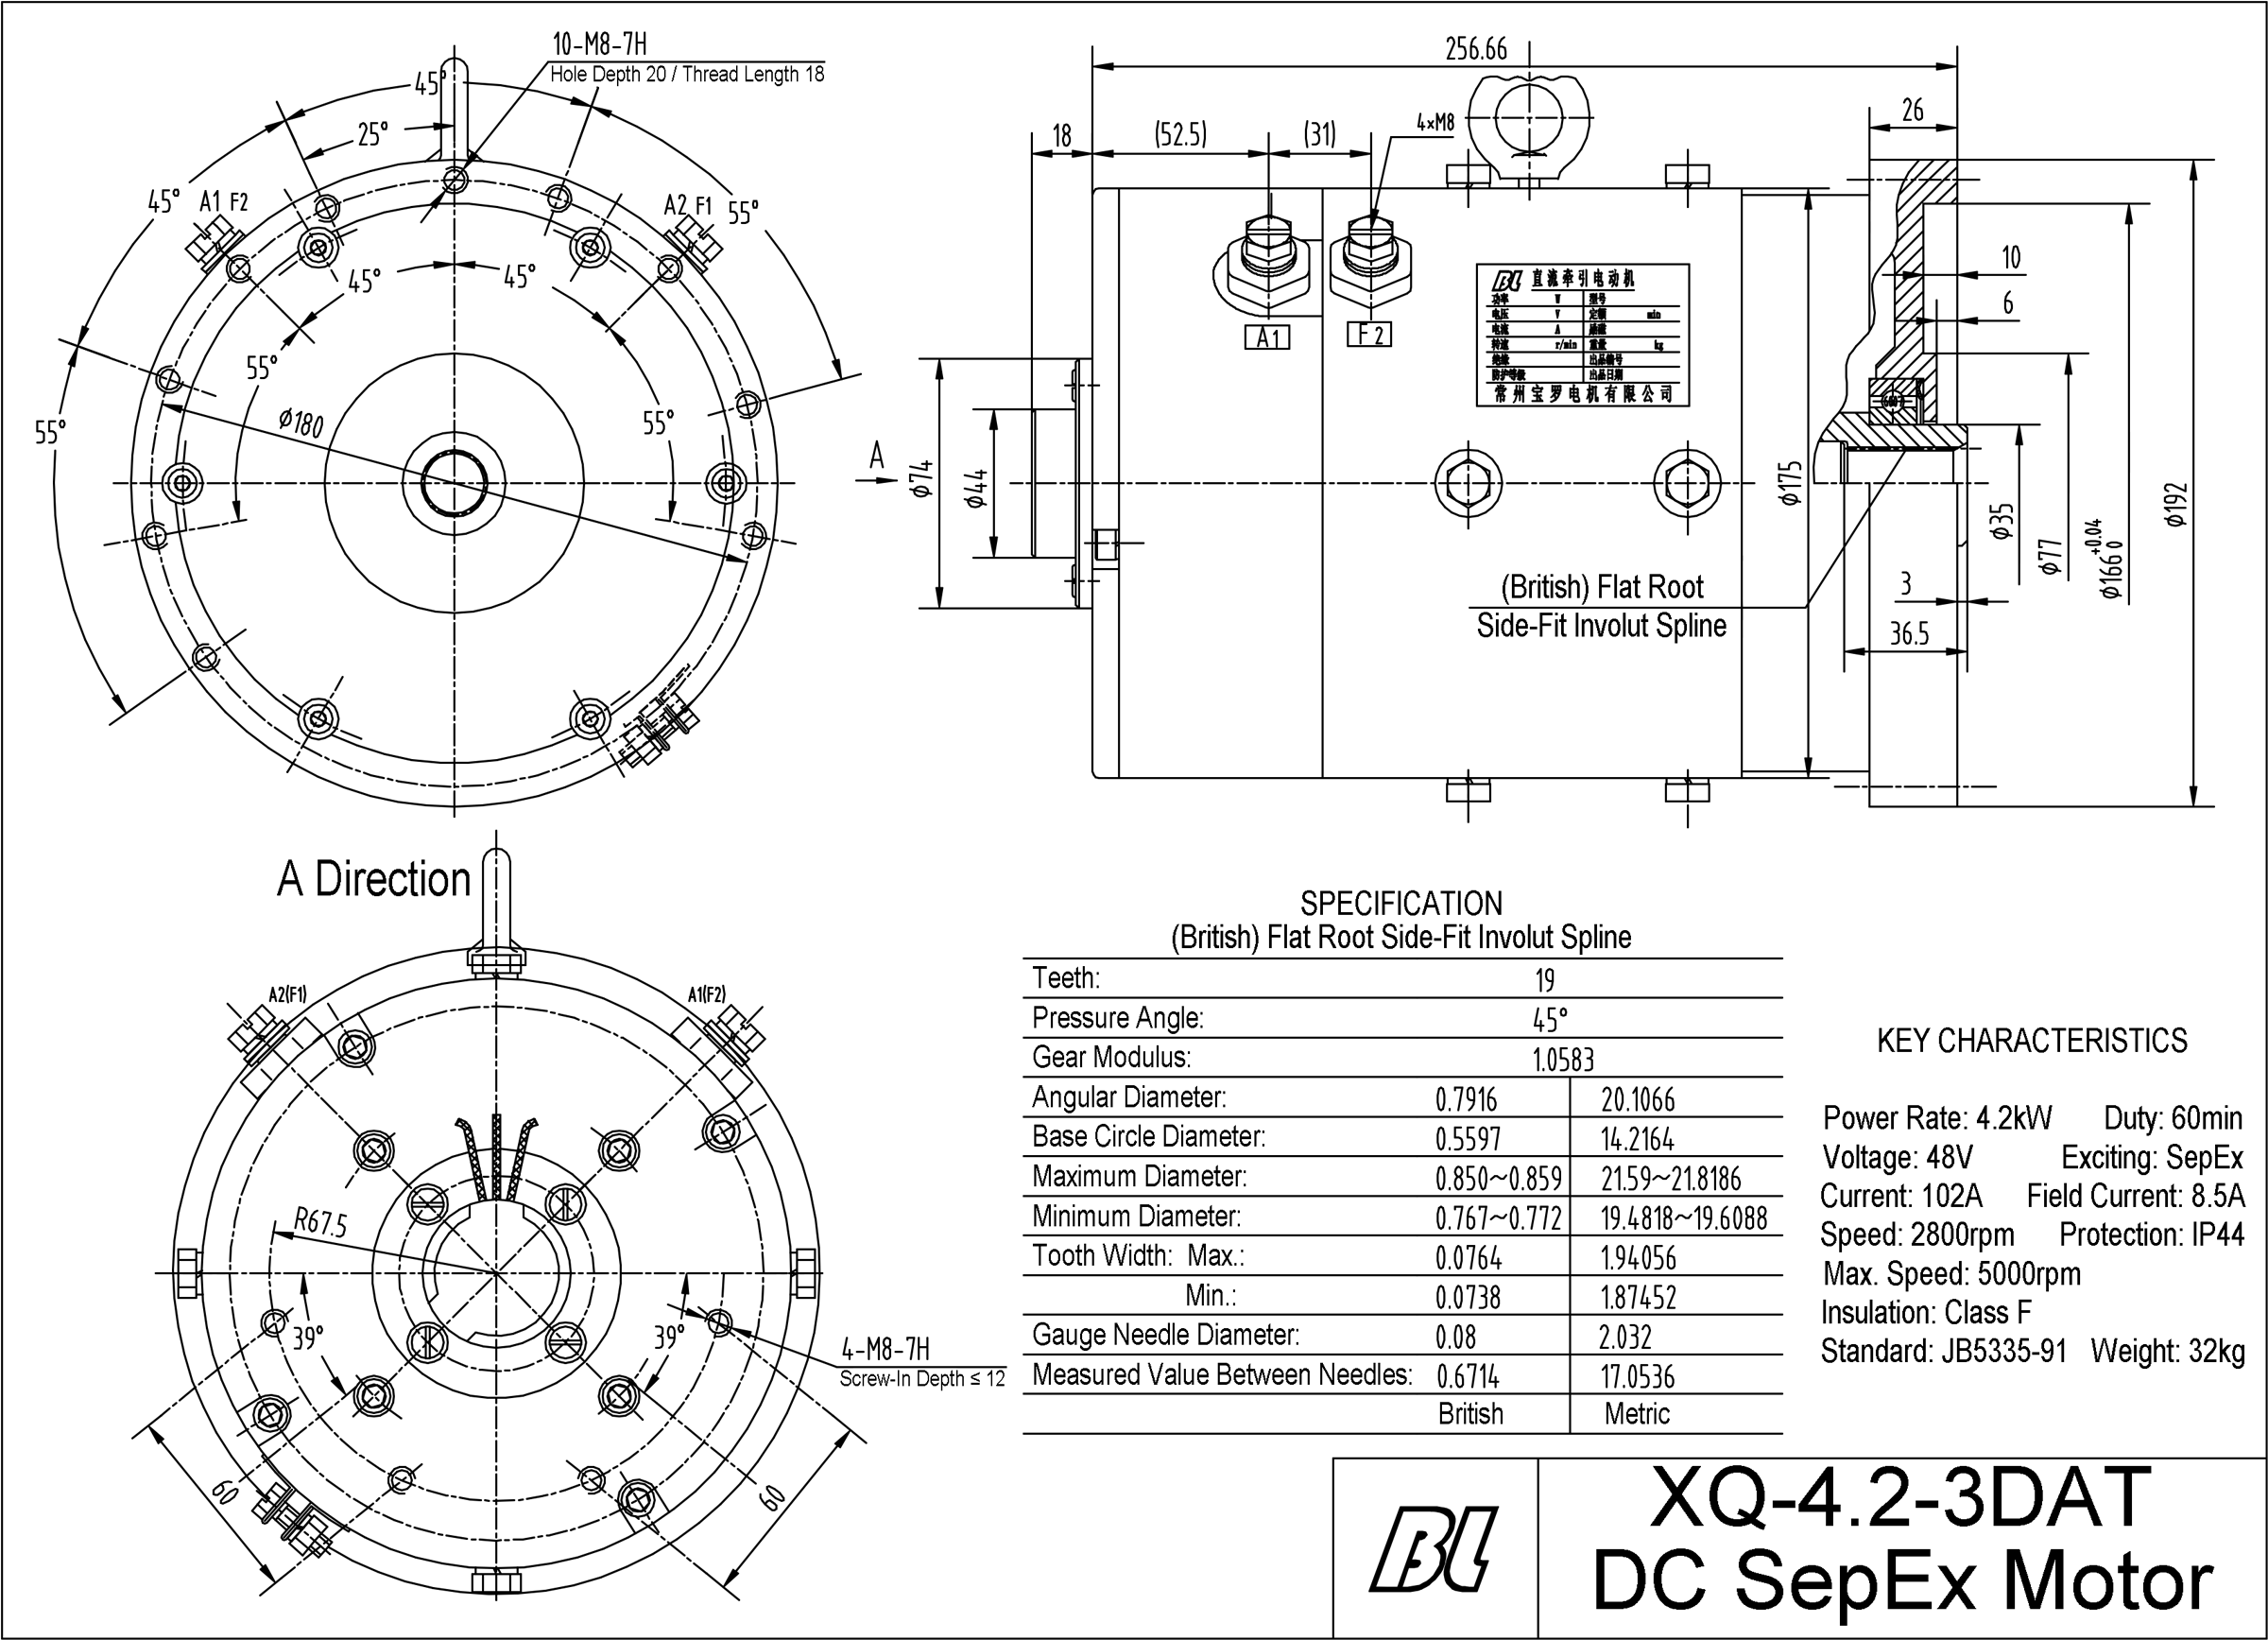 DC SepEx Motor (Shunt Wire Type), Model XQ-4.2-3DAT, Outline Diagram